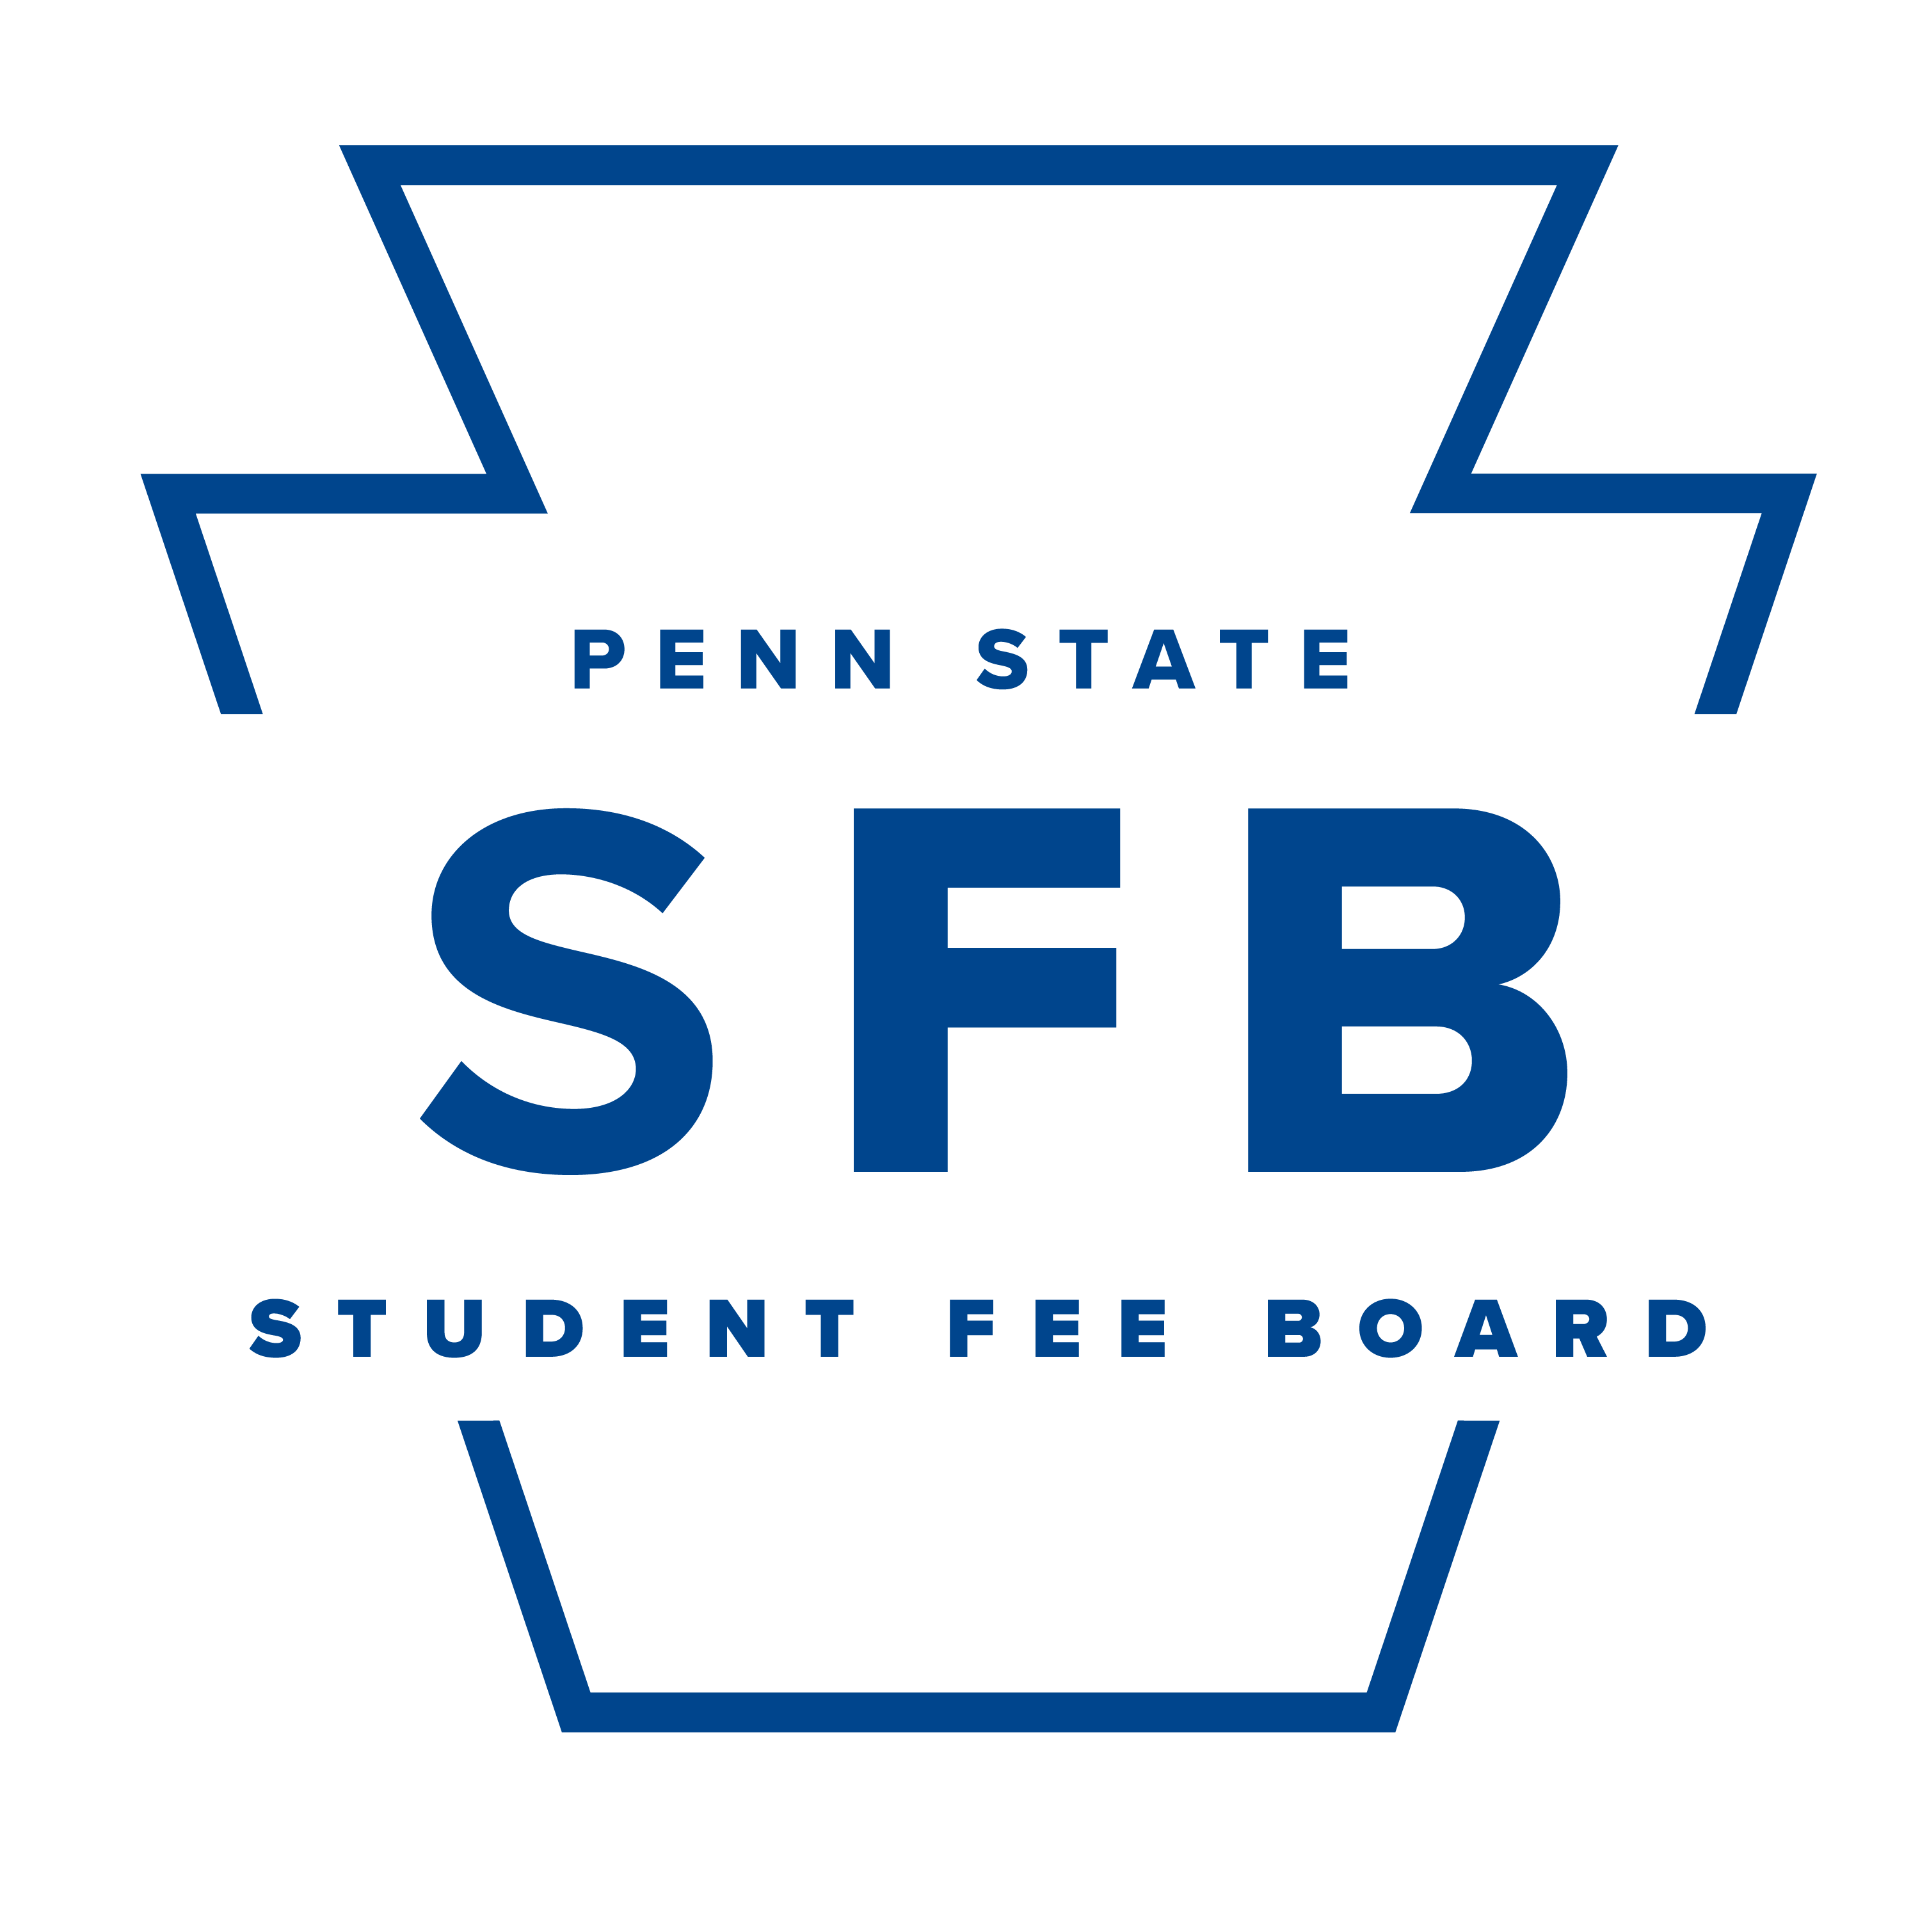 Penn State Student Fee Board